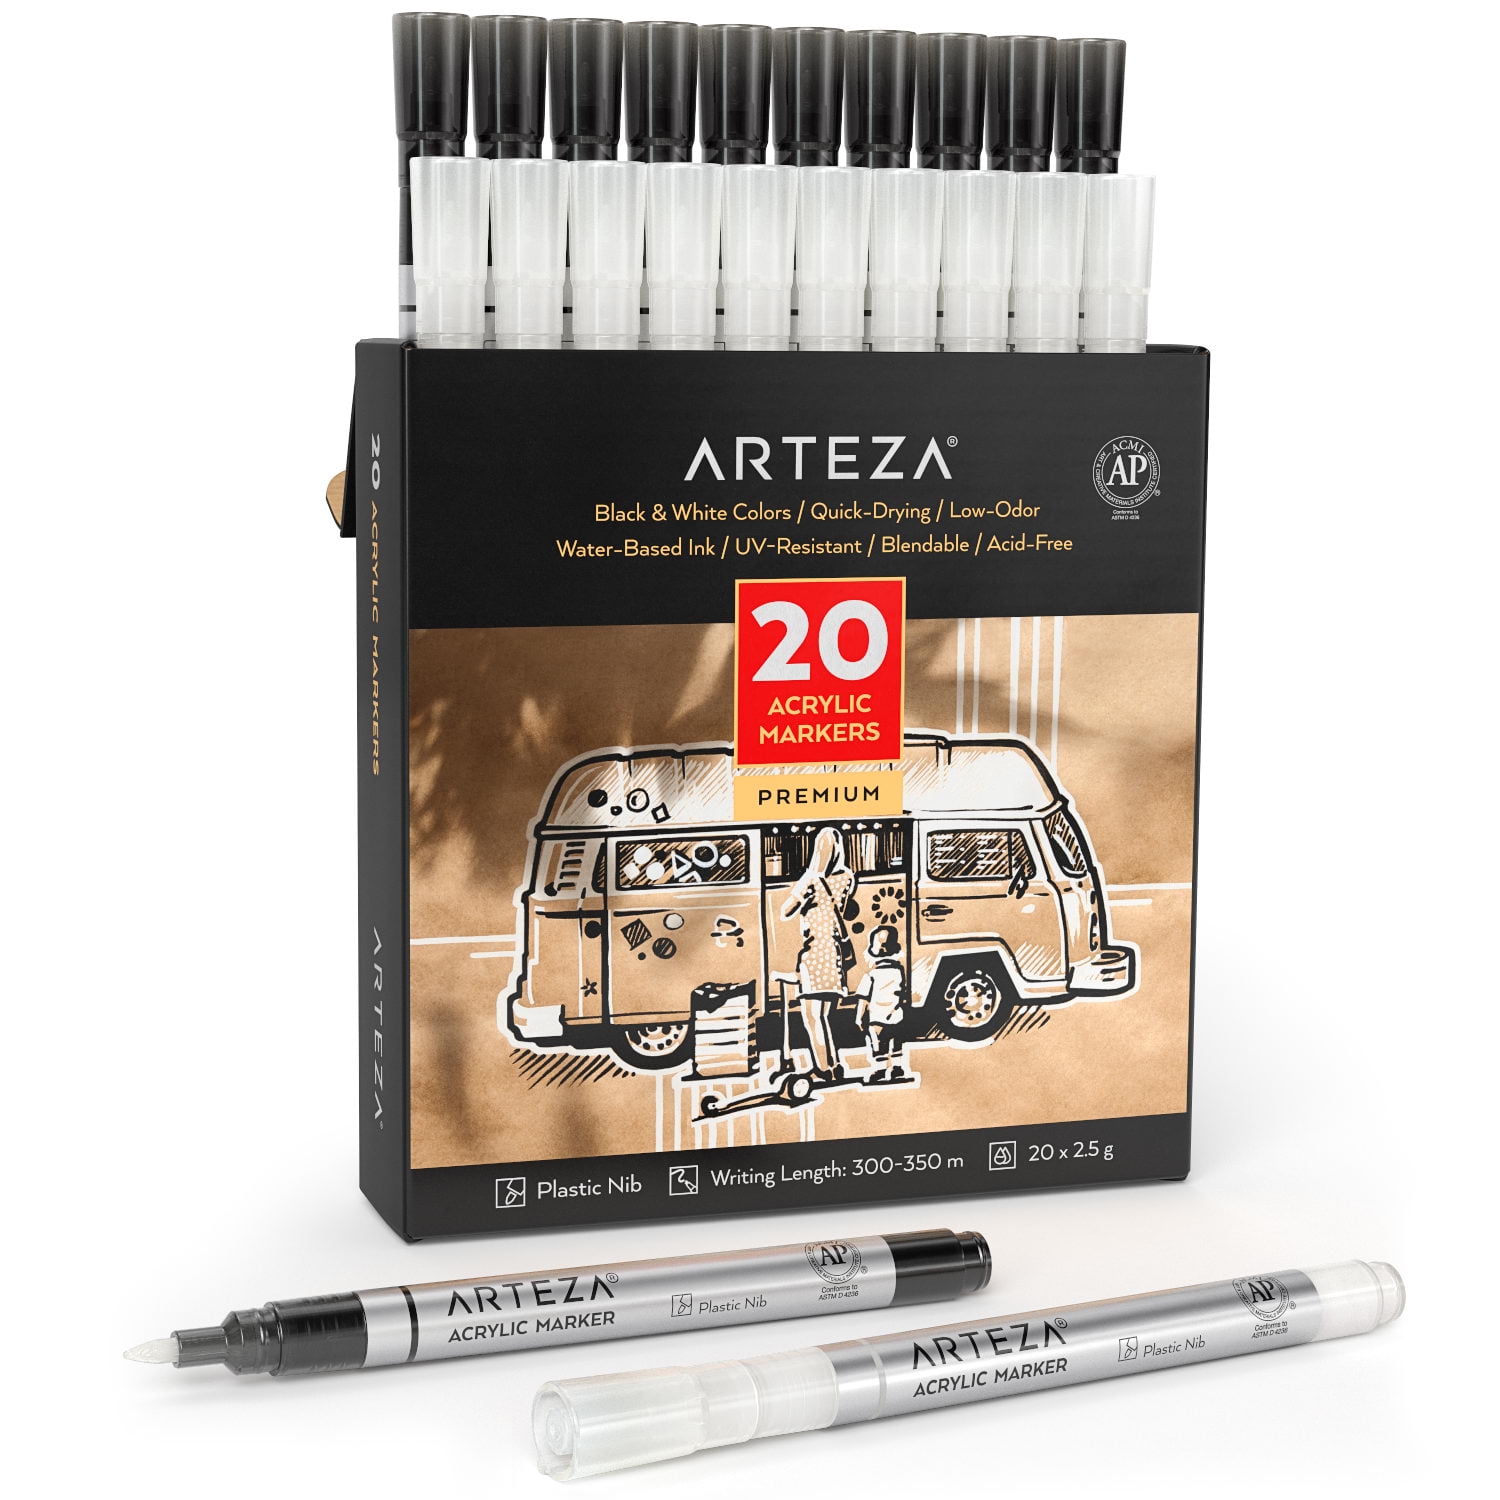  ARTEZA Acrylic Paint Markers, 7 Acrylic Paint Pens in